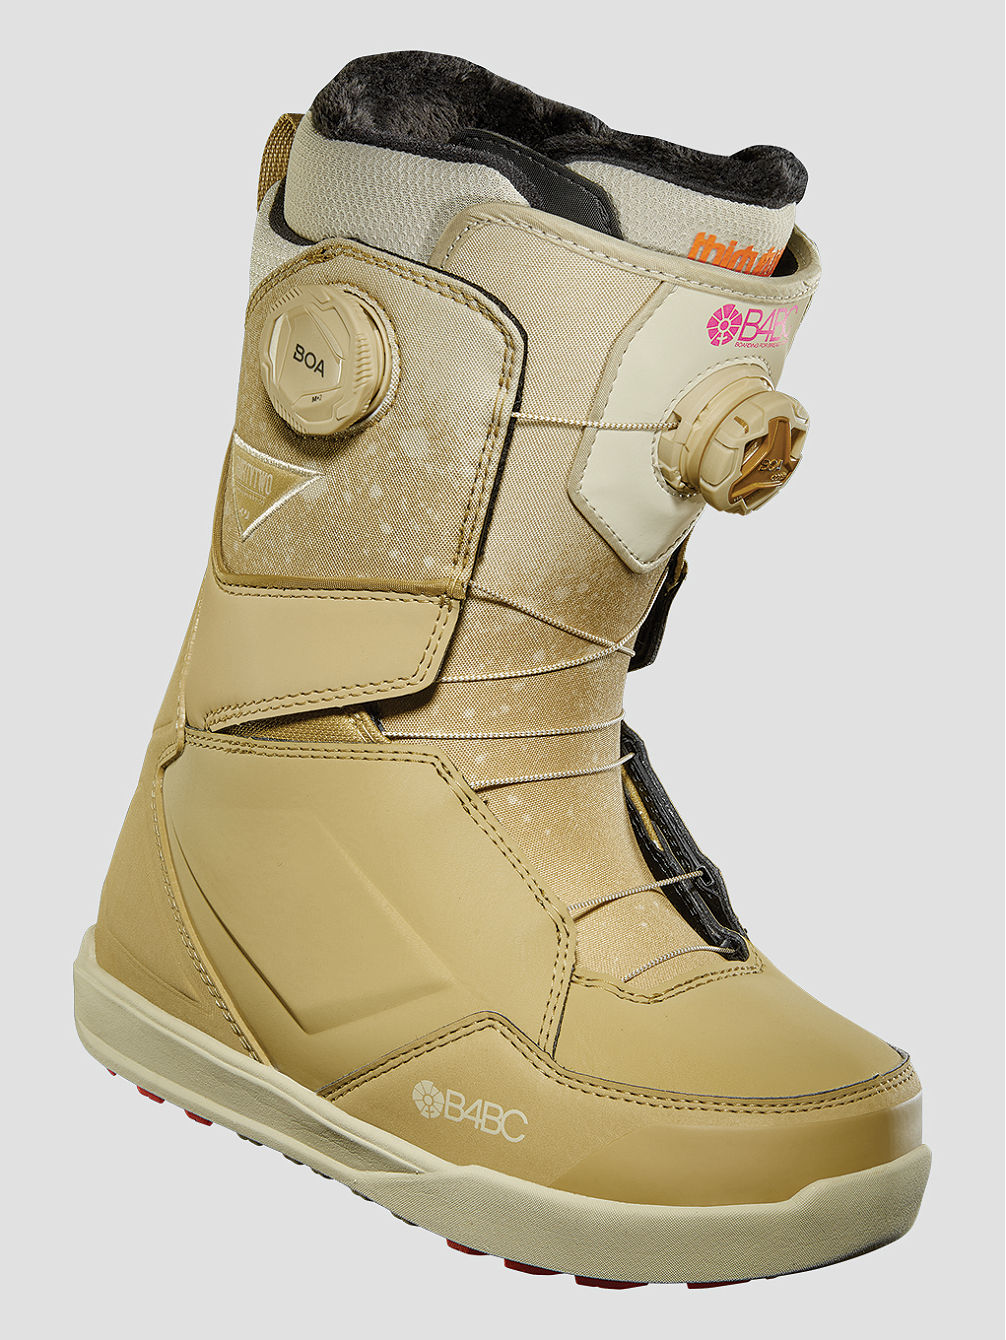 Lashed Double Boa B4Bc 2024 Snowboard schoenen